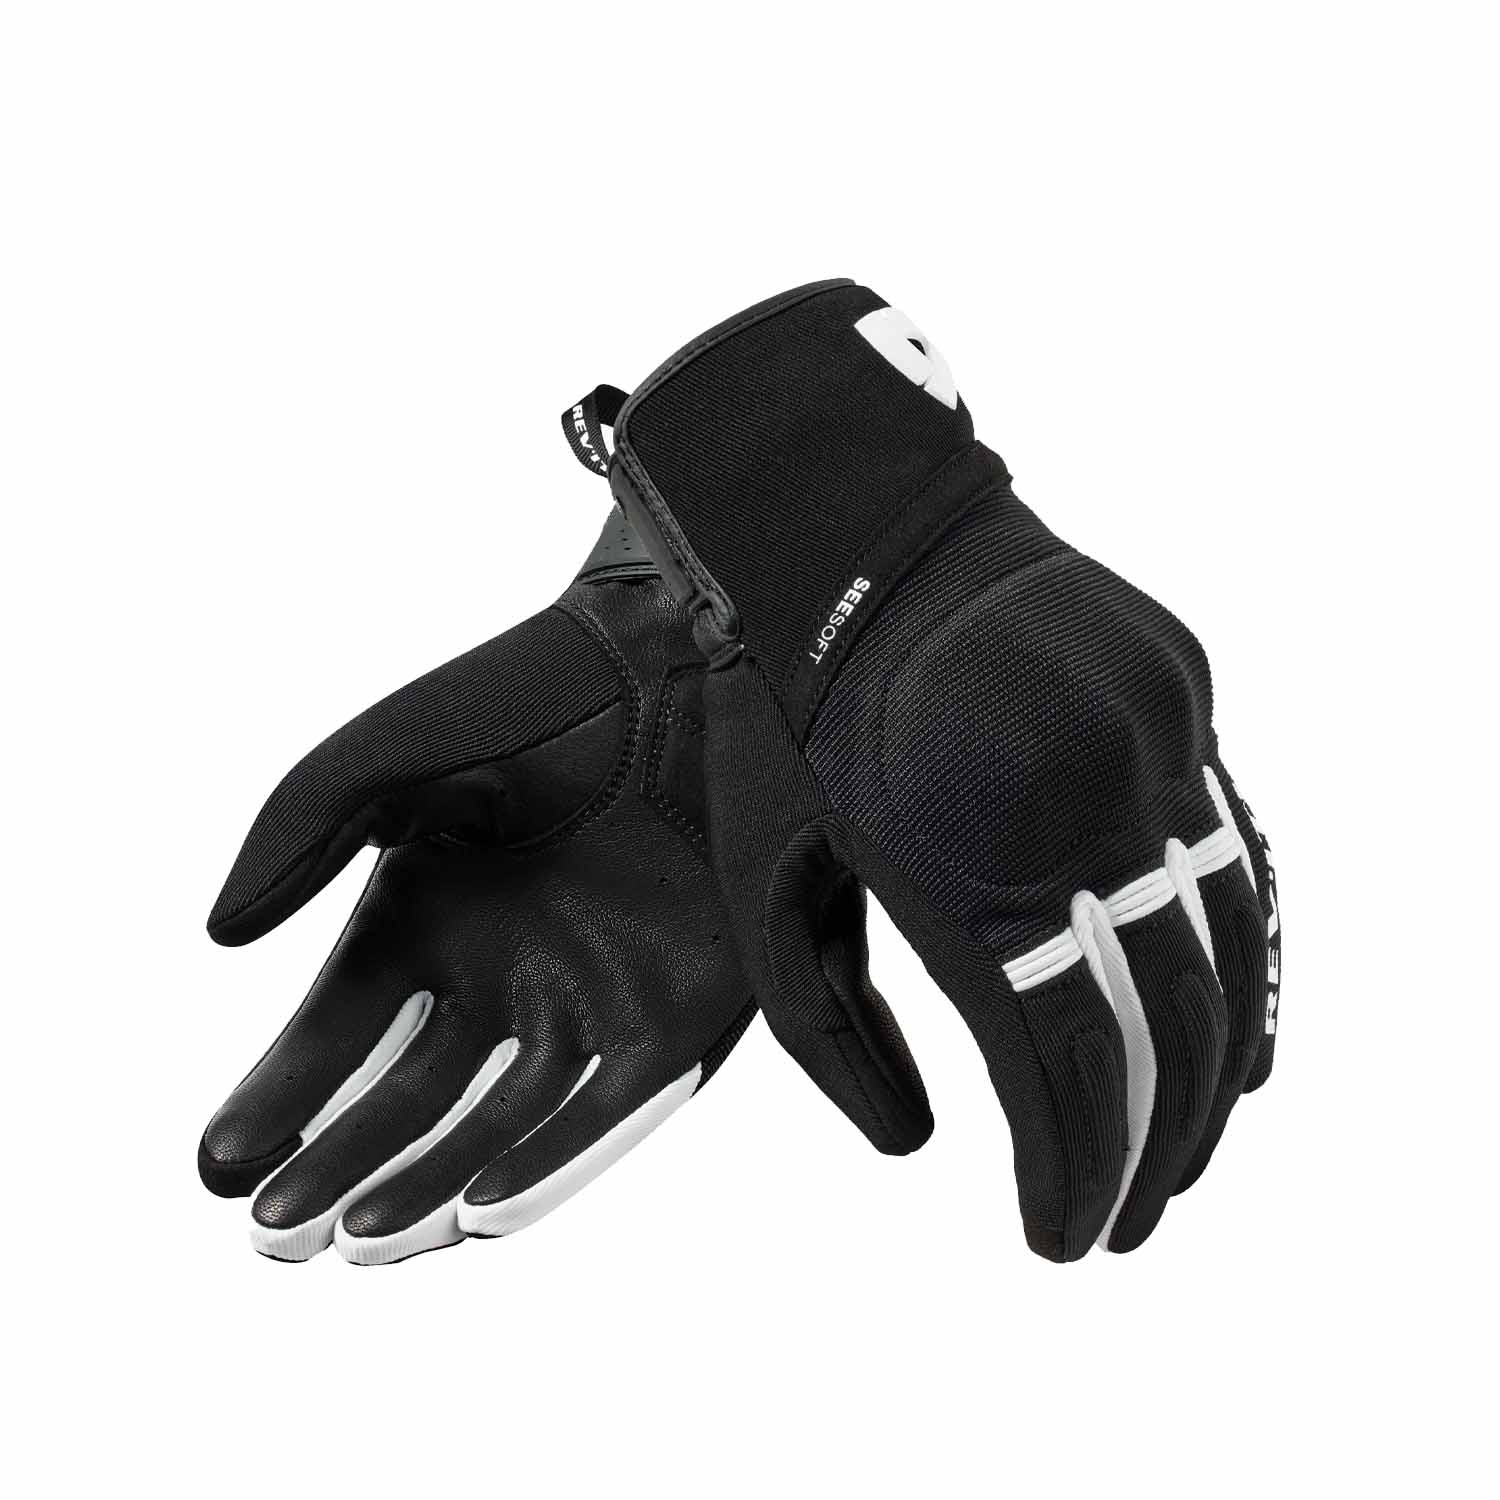 Image of REV'IT! Mosca 2 Gloves Black White Talla XL